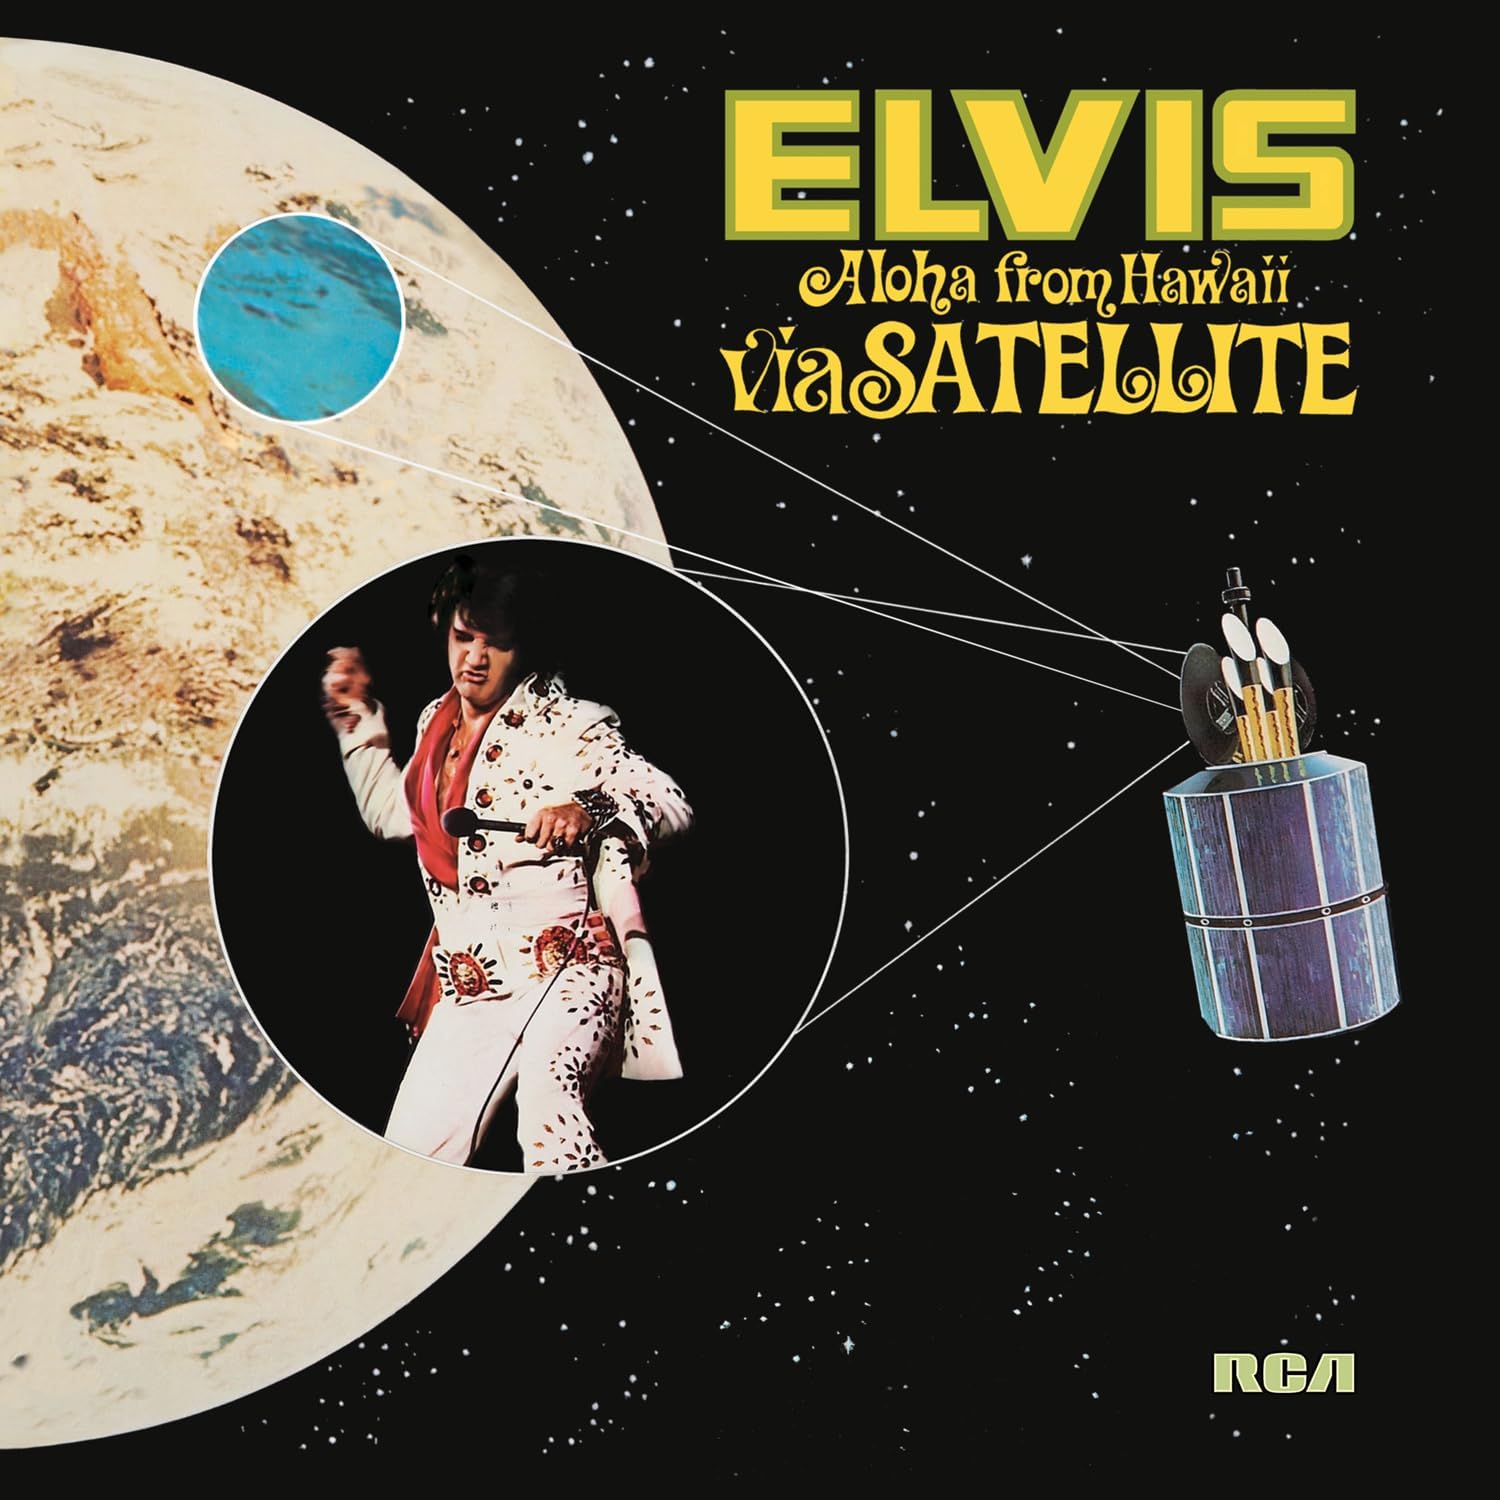 Elvis_aloha_from_hawaii_via_satellite CD album cover